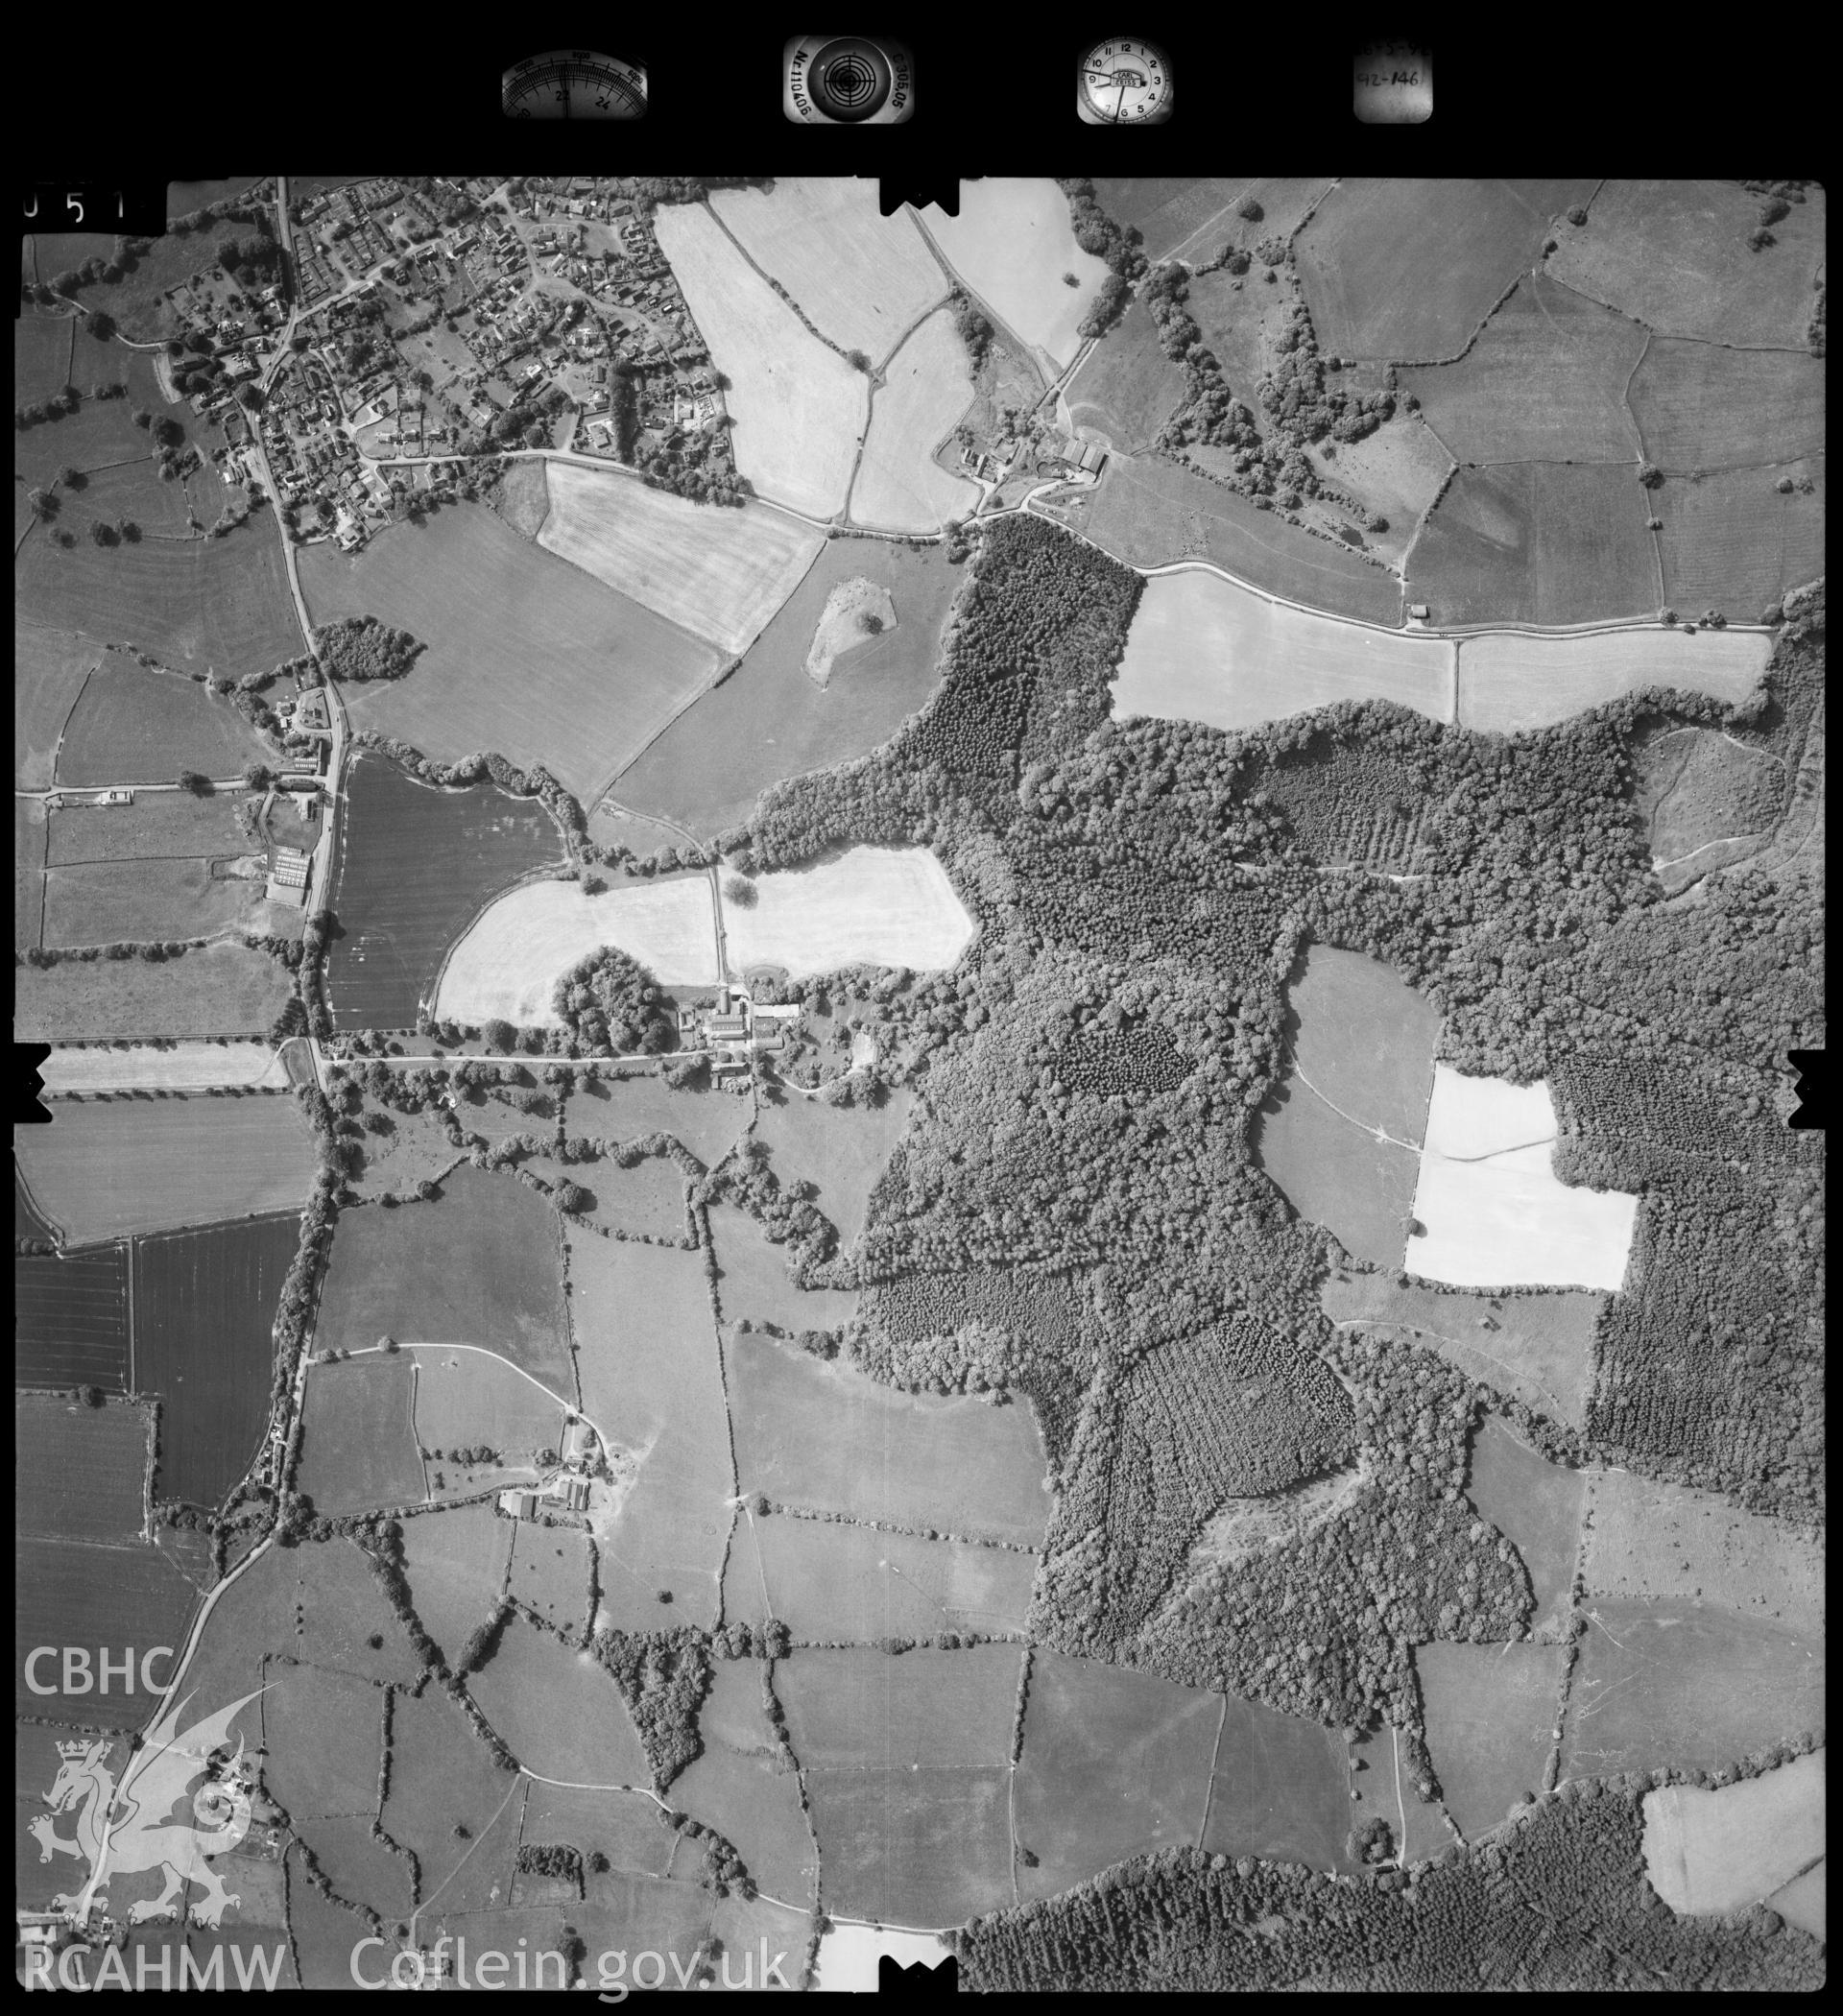 Digitized copy of an aerial photograph showing Llangybi Castle, taken by Ordnance Survey, 1992.